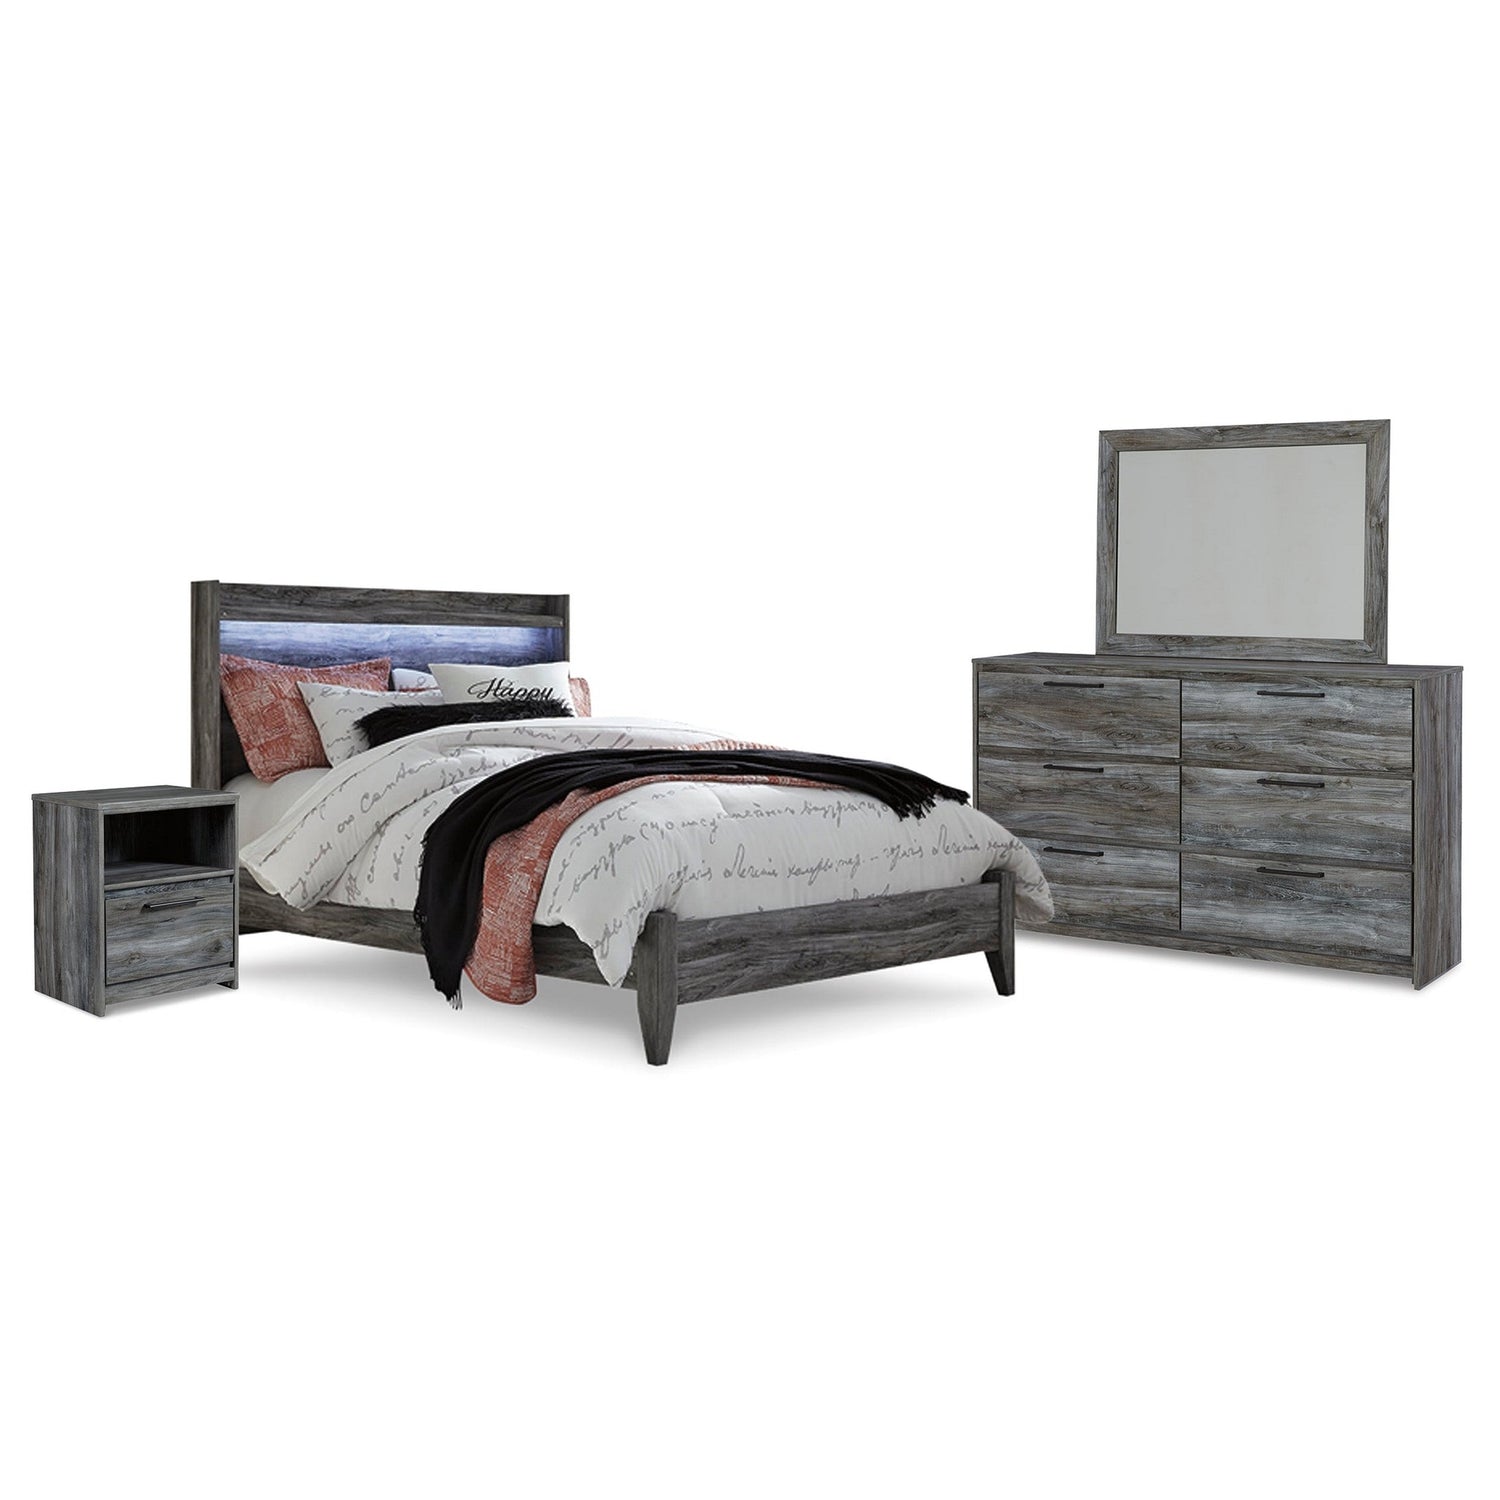 Baystorm Queen Panel Bed, Dresser, Mirror and Nightstand Ash-B221B17